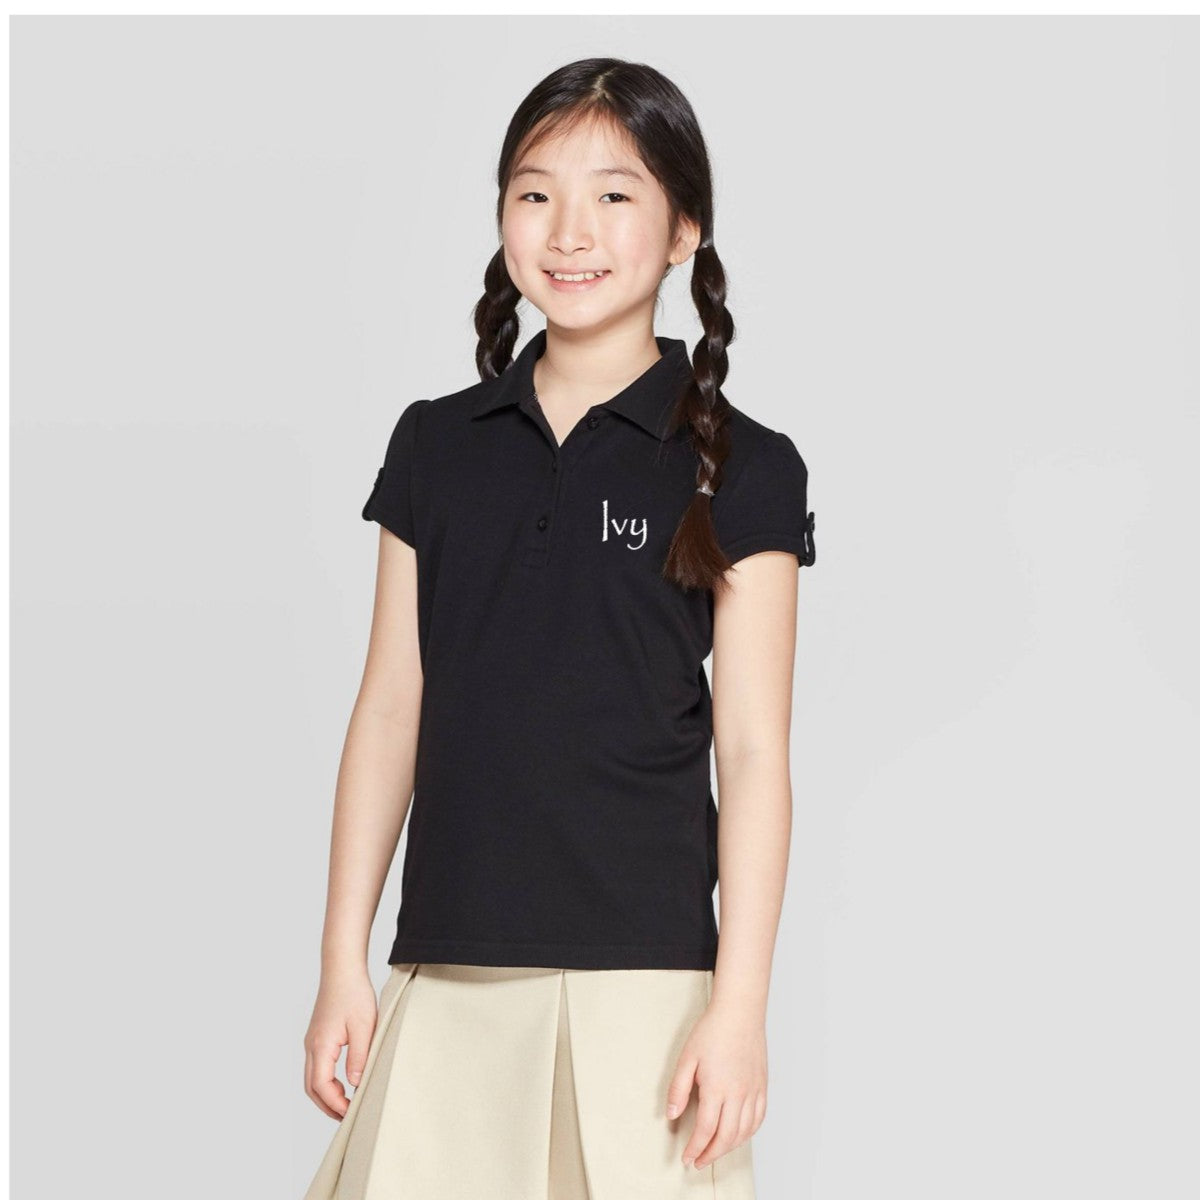 Seeds Academy Uniform-Boys/Girls Short sleeve Polo (Black)